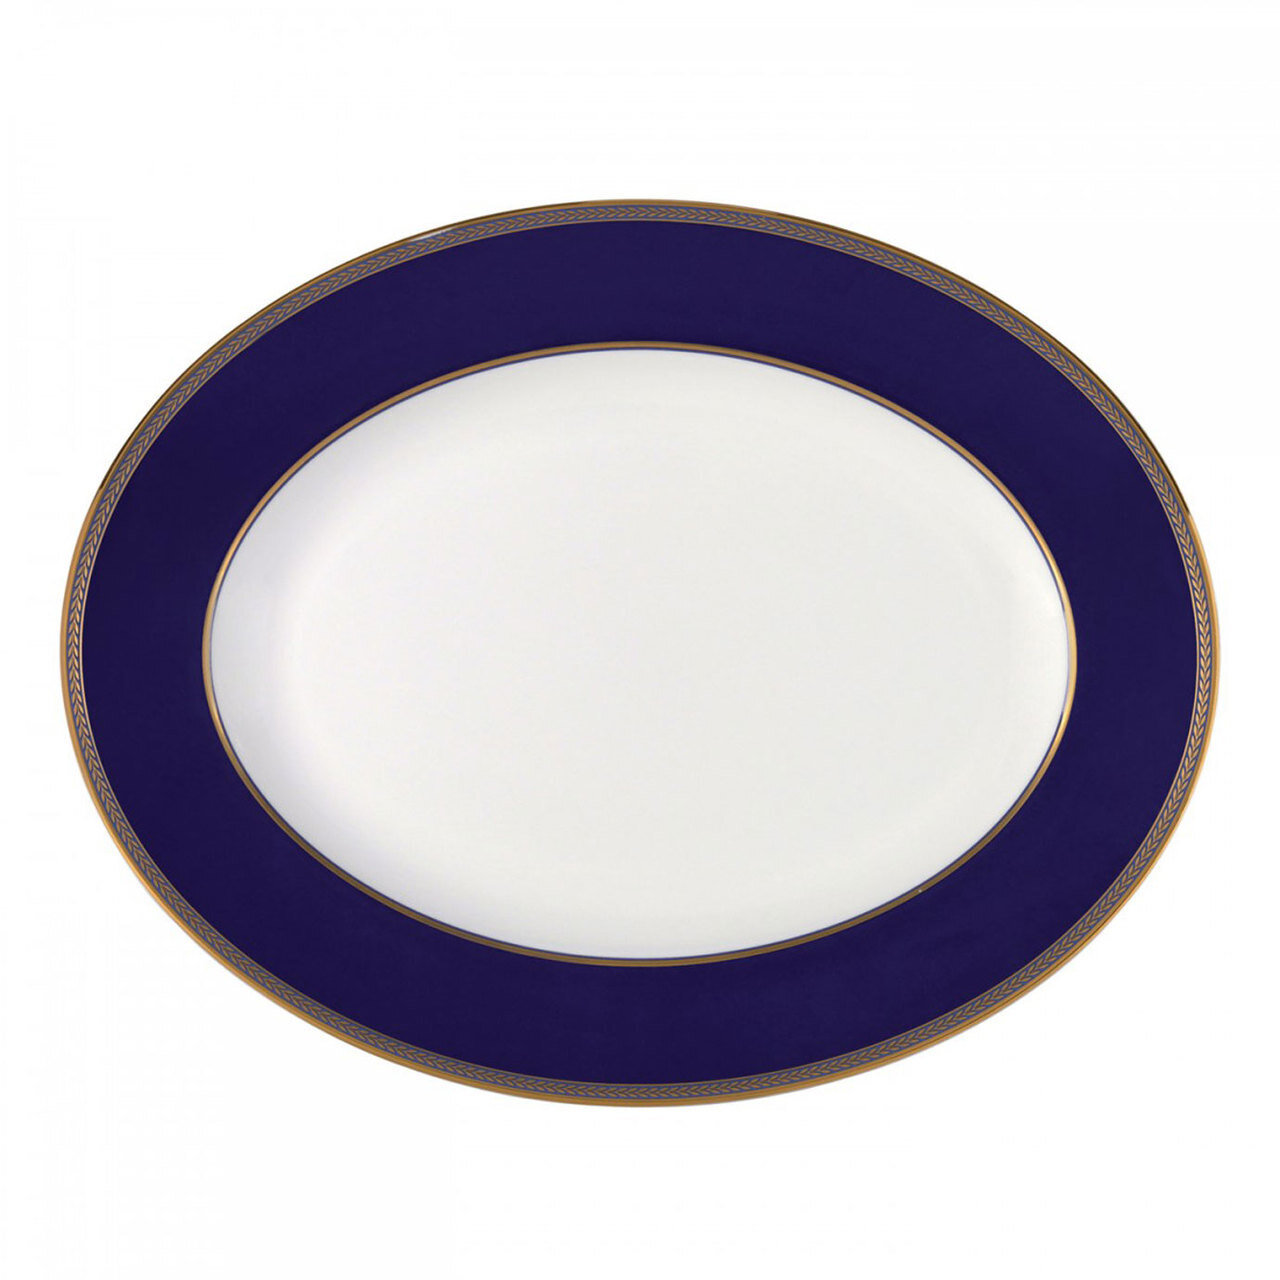 Wedgwood Renaissance Gold Oval Platter 13.75 Inch